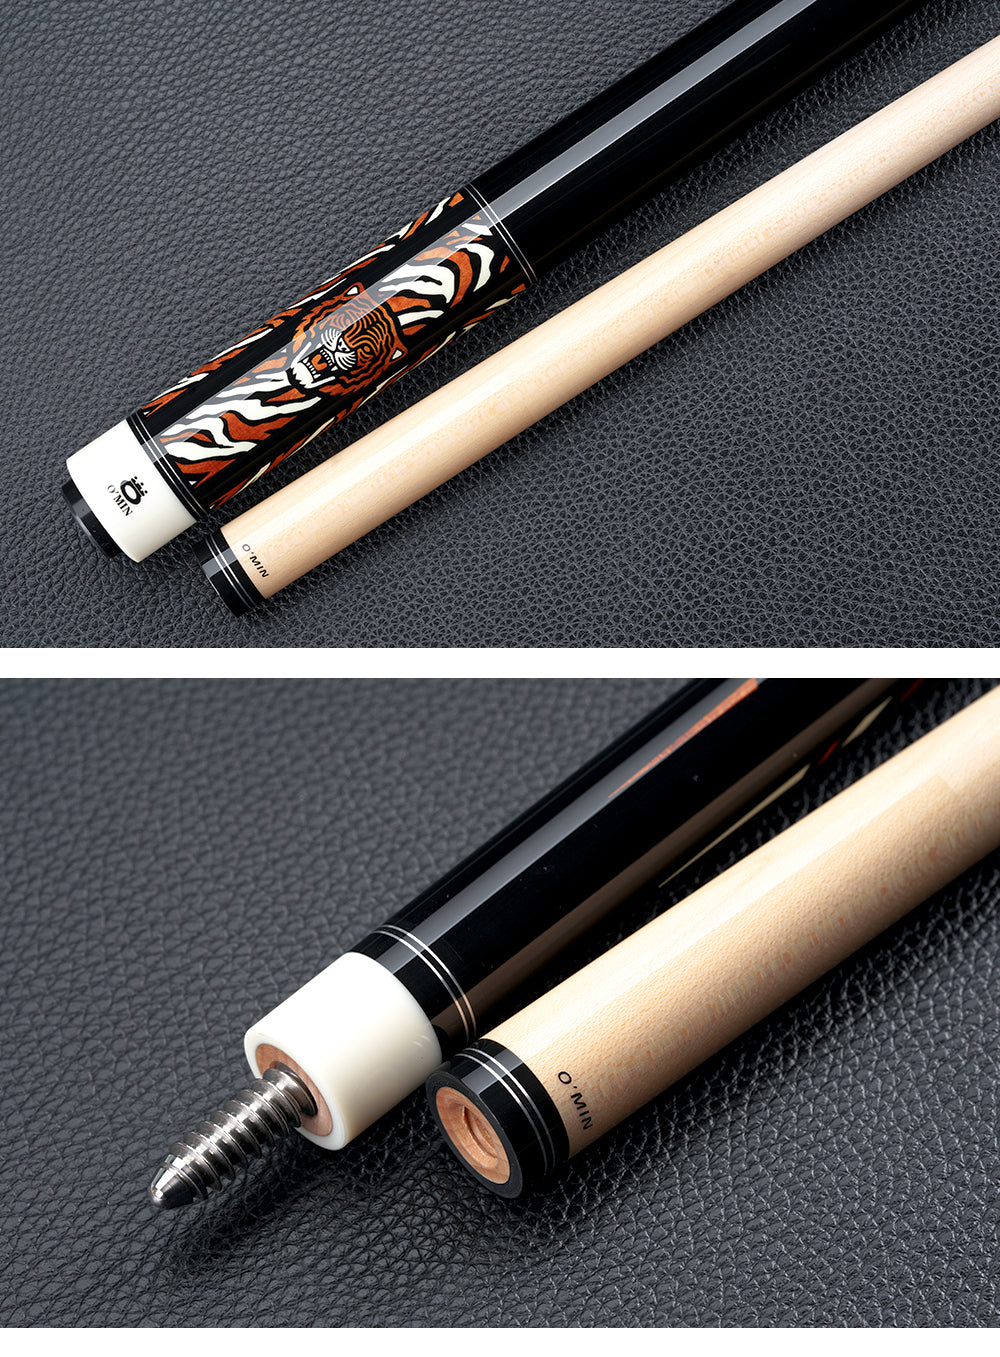 OMIN-Maple Shaft Billiard Pool Cue Kit, FUHU Series, Professional Stick, 3/8*10 Joint, Smooth Grip, Piano Painting, 1/2 Billiard